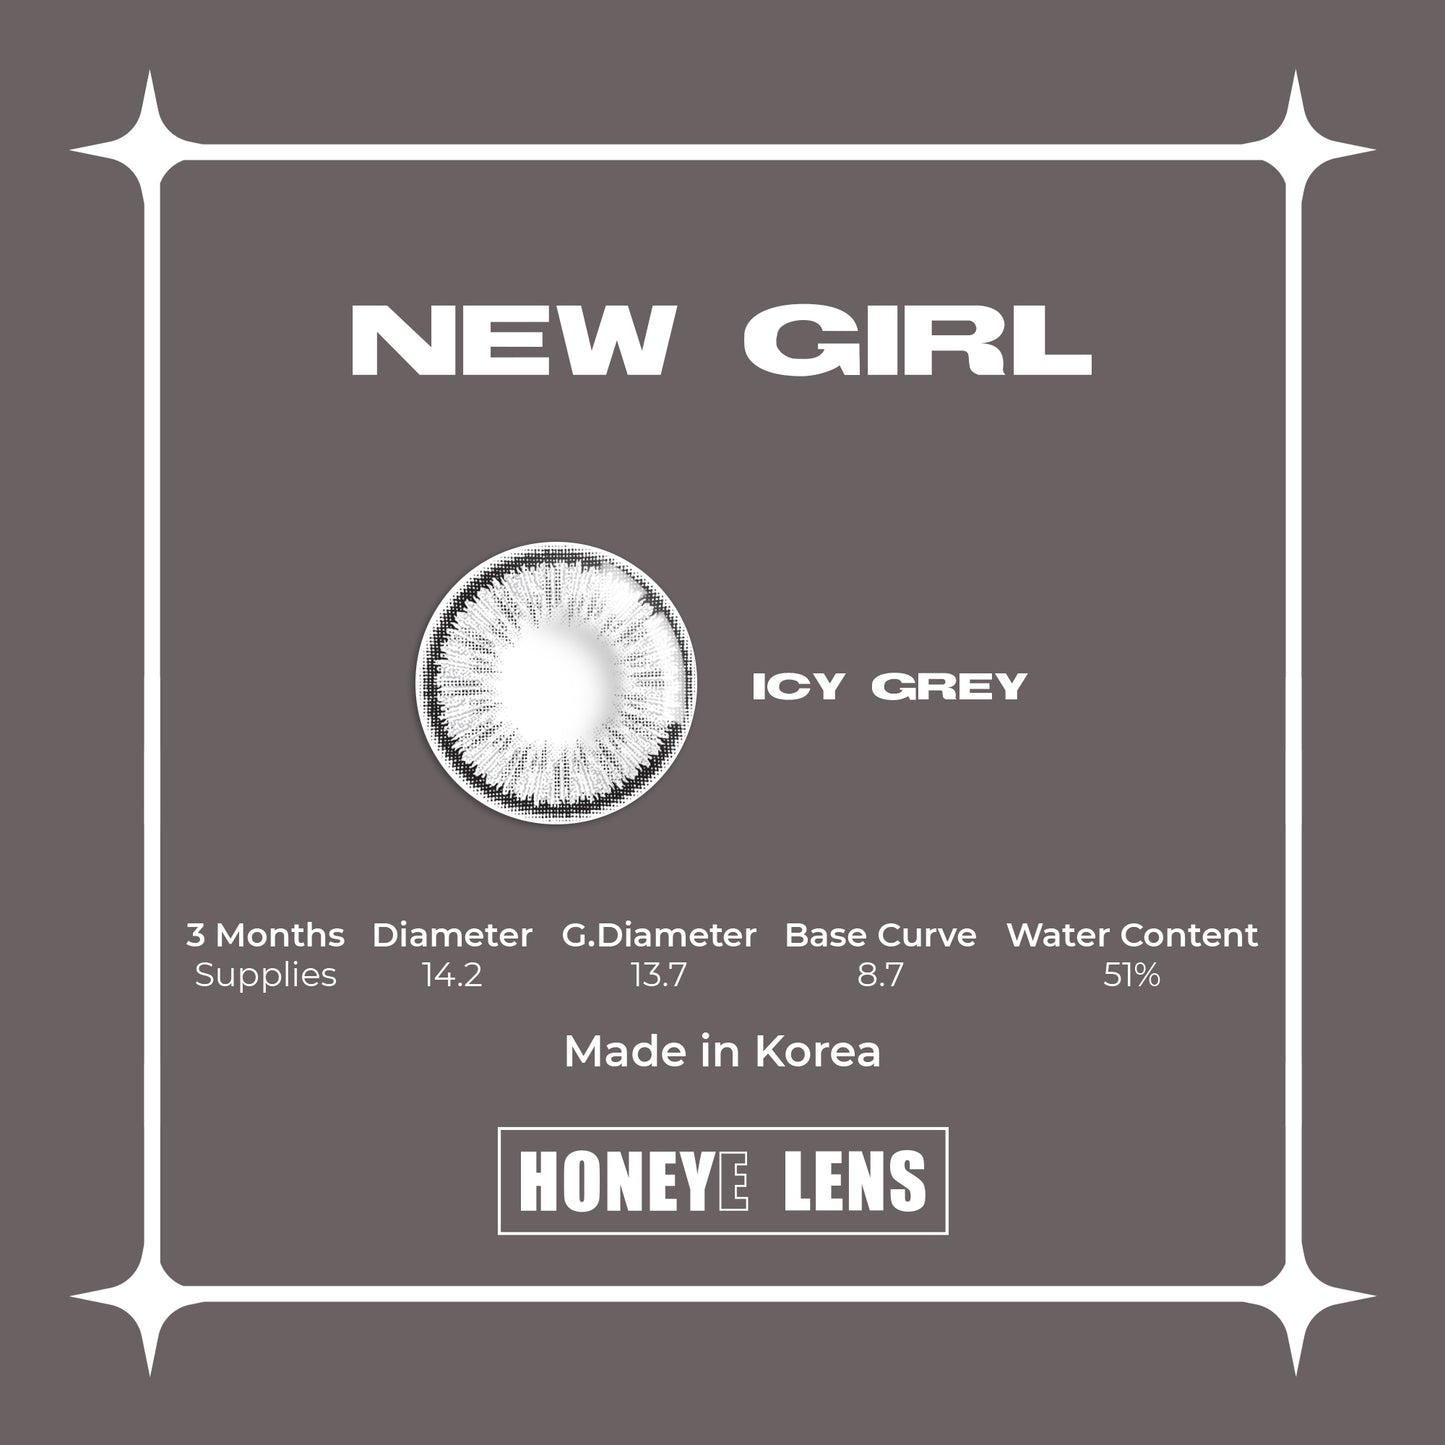 New Girl Icy Grey